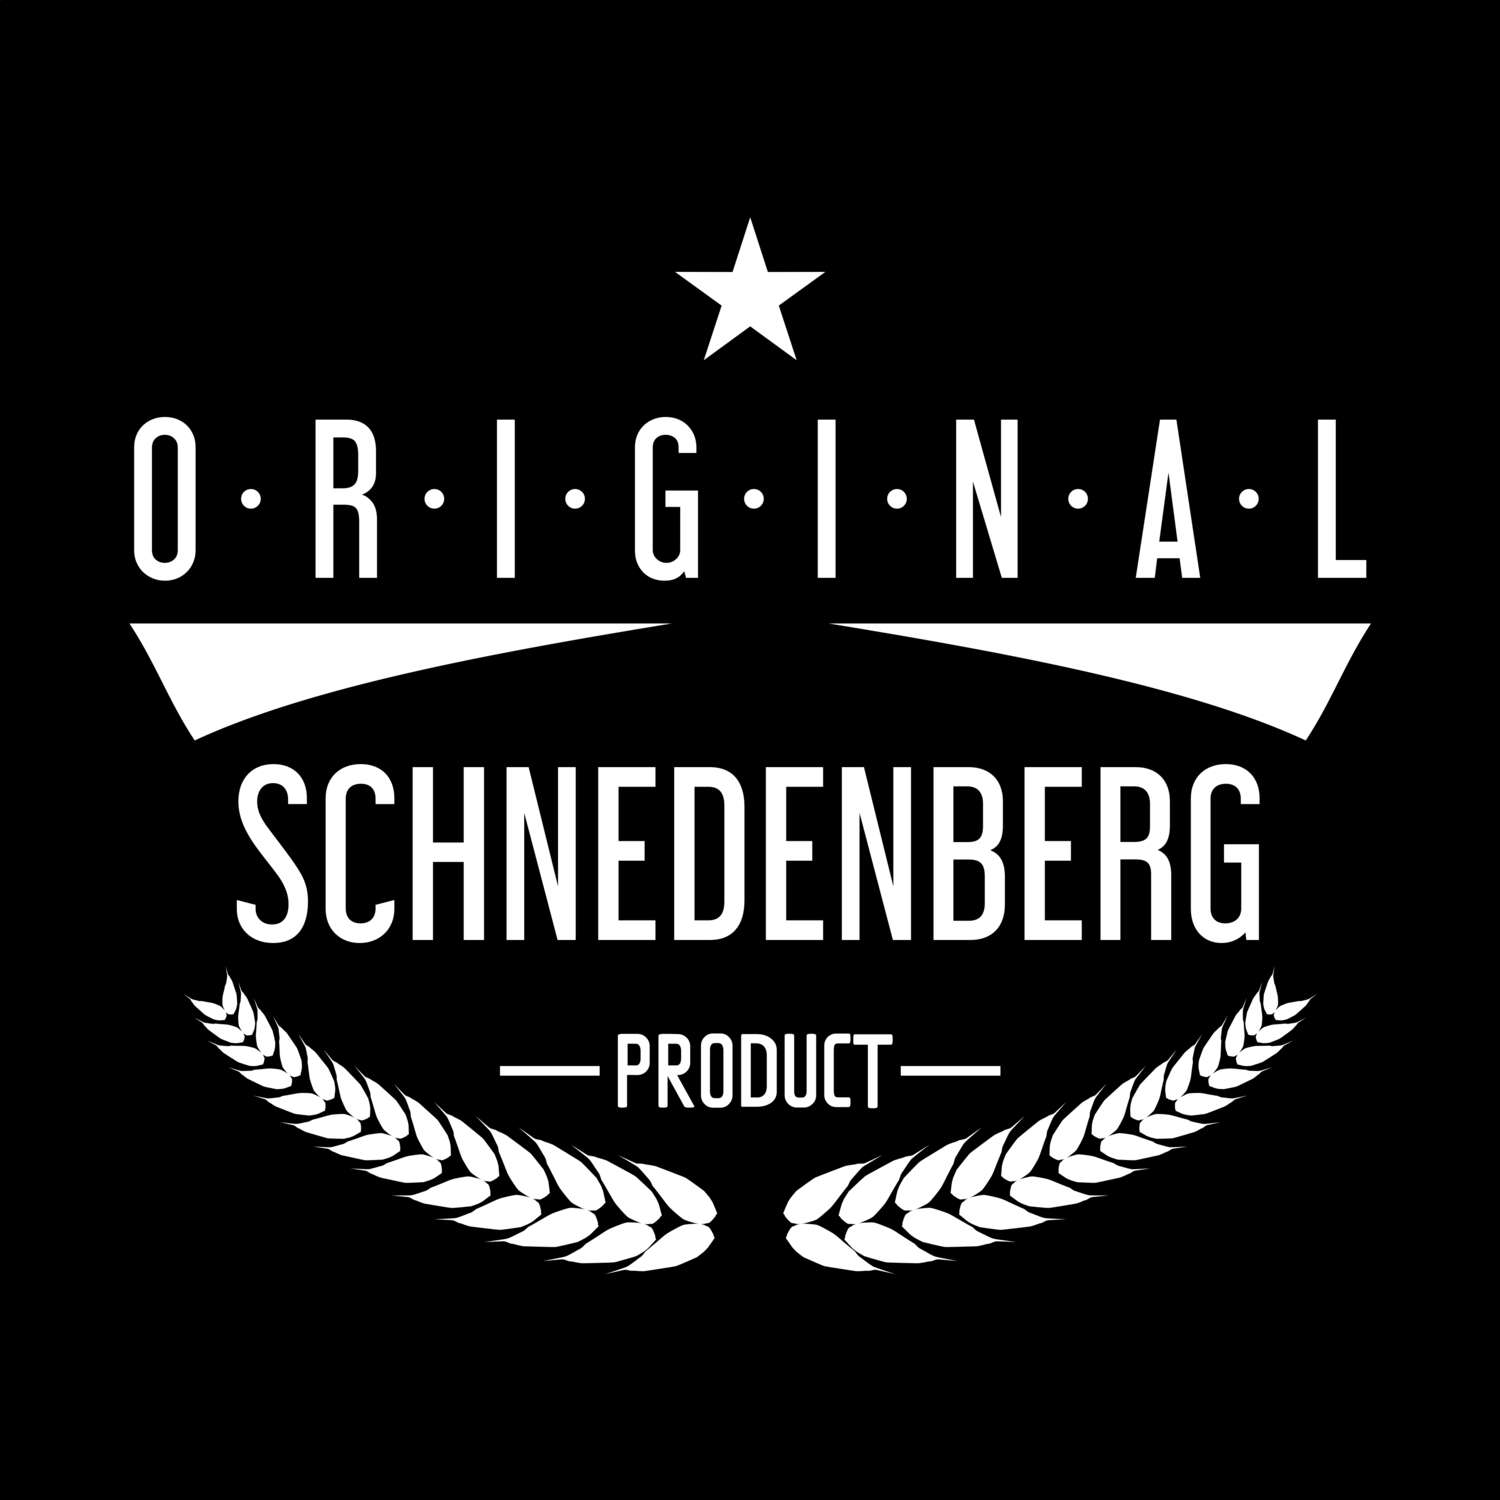 Schnedenberg T-Shirt »Original Product«